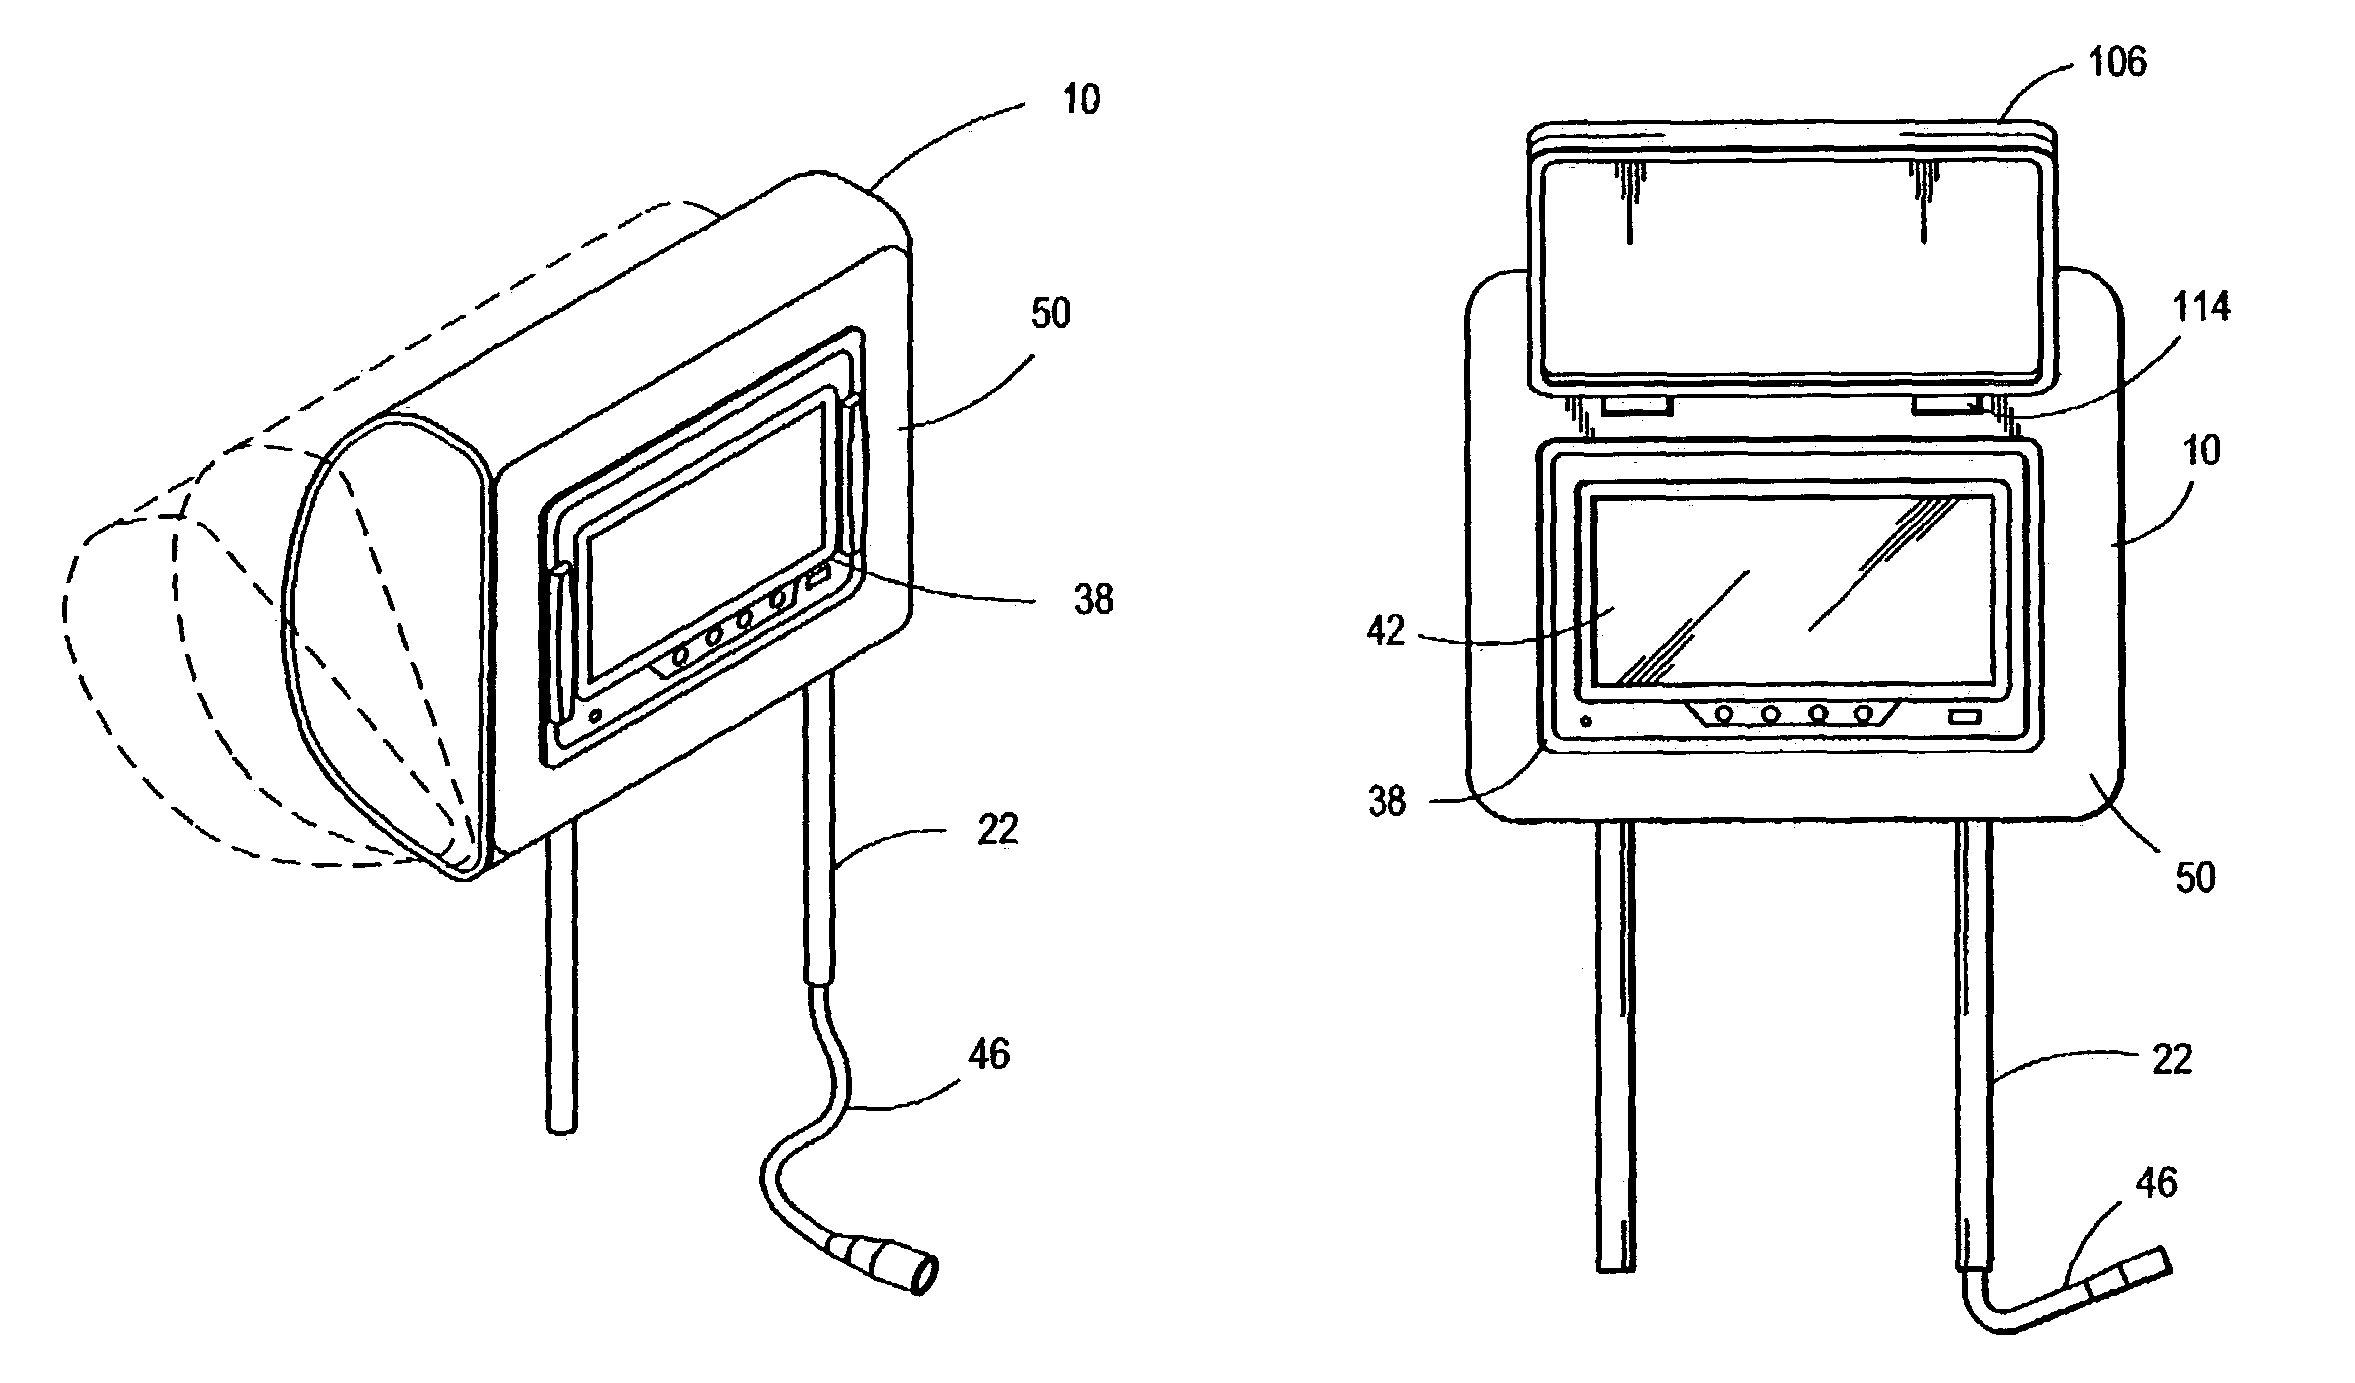 Headrest mounted video display